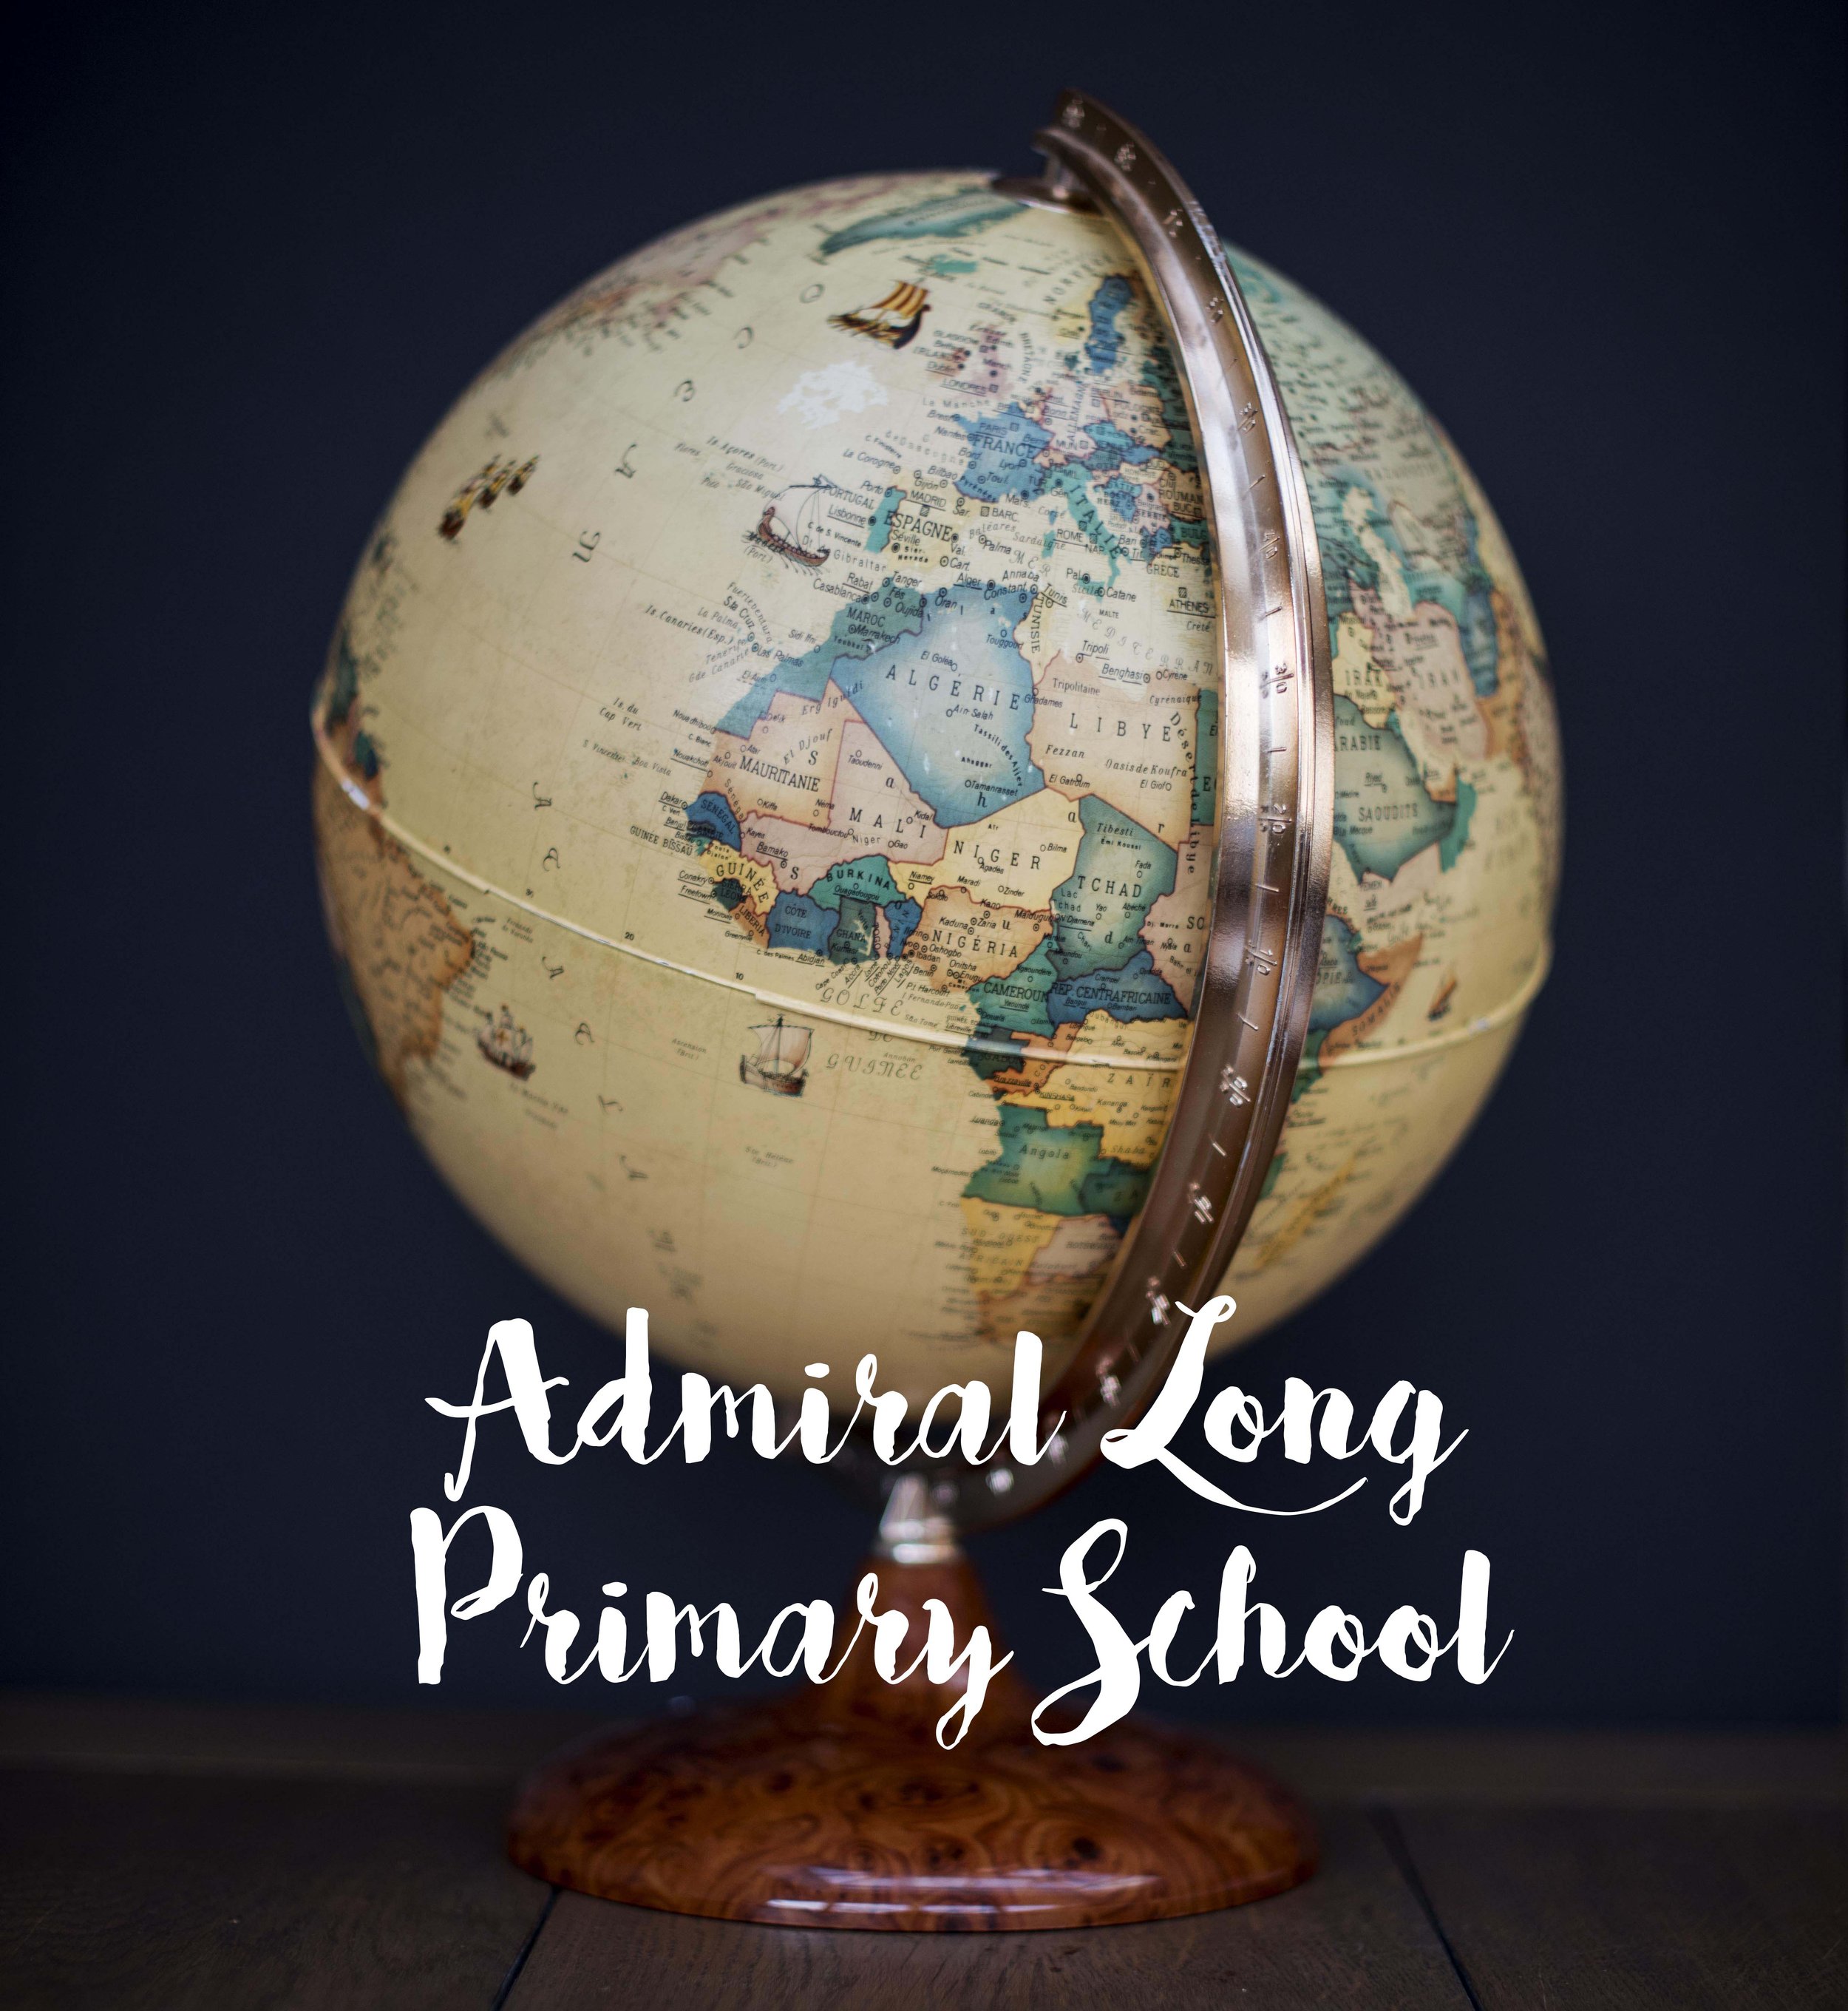 admiral long globe.jpg